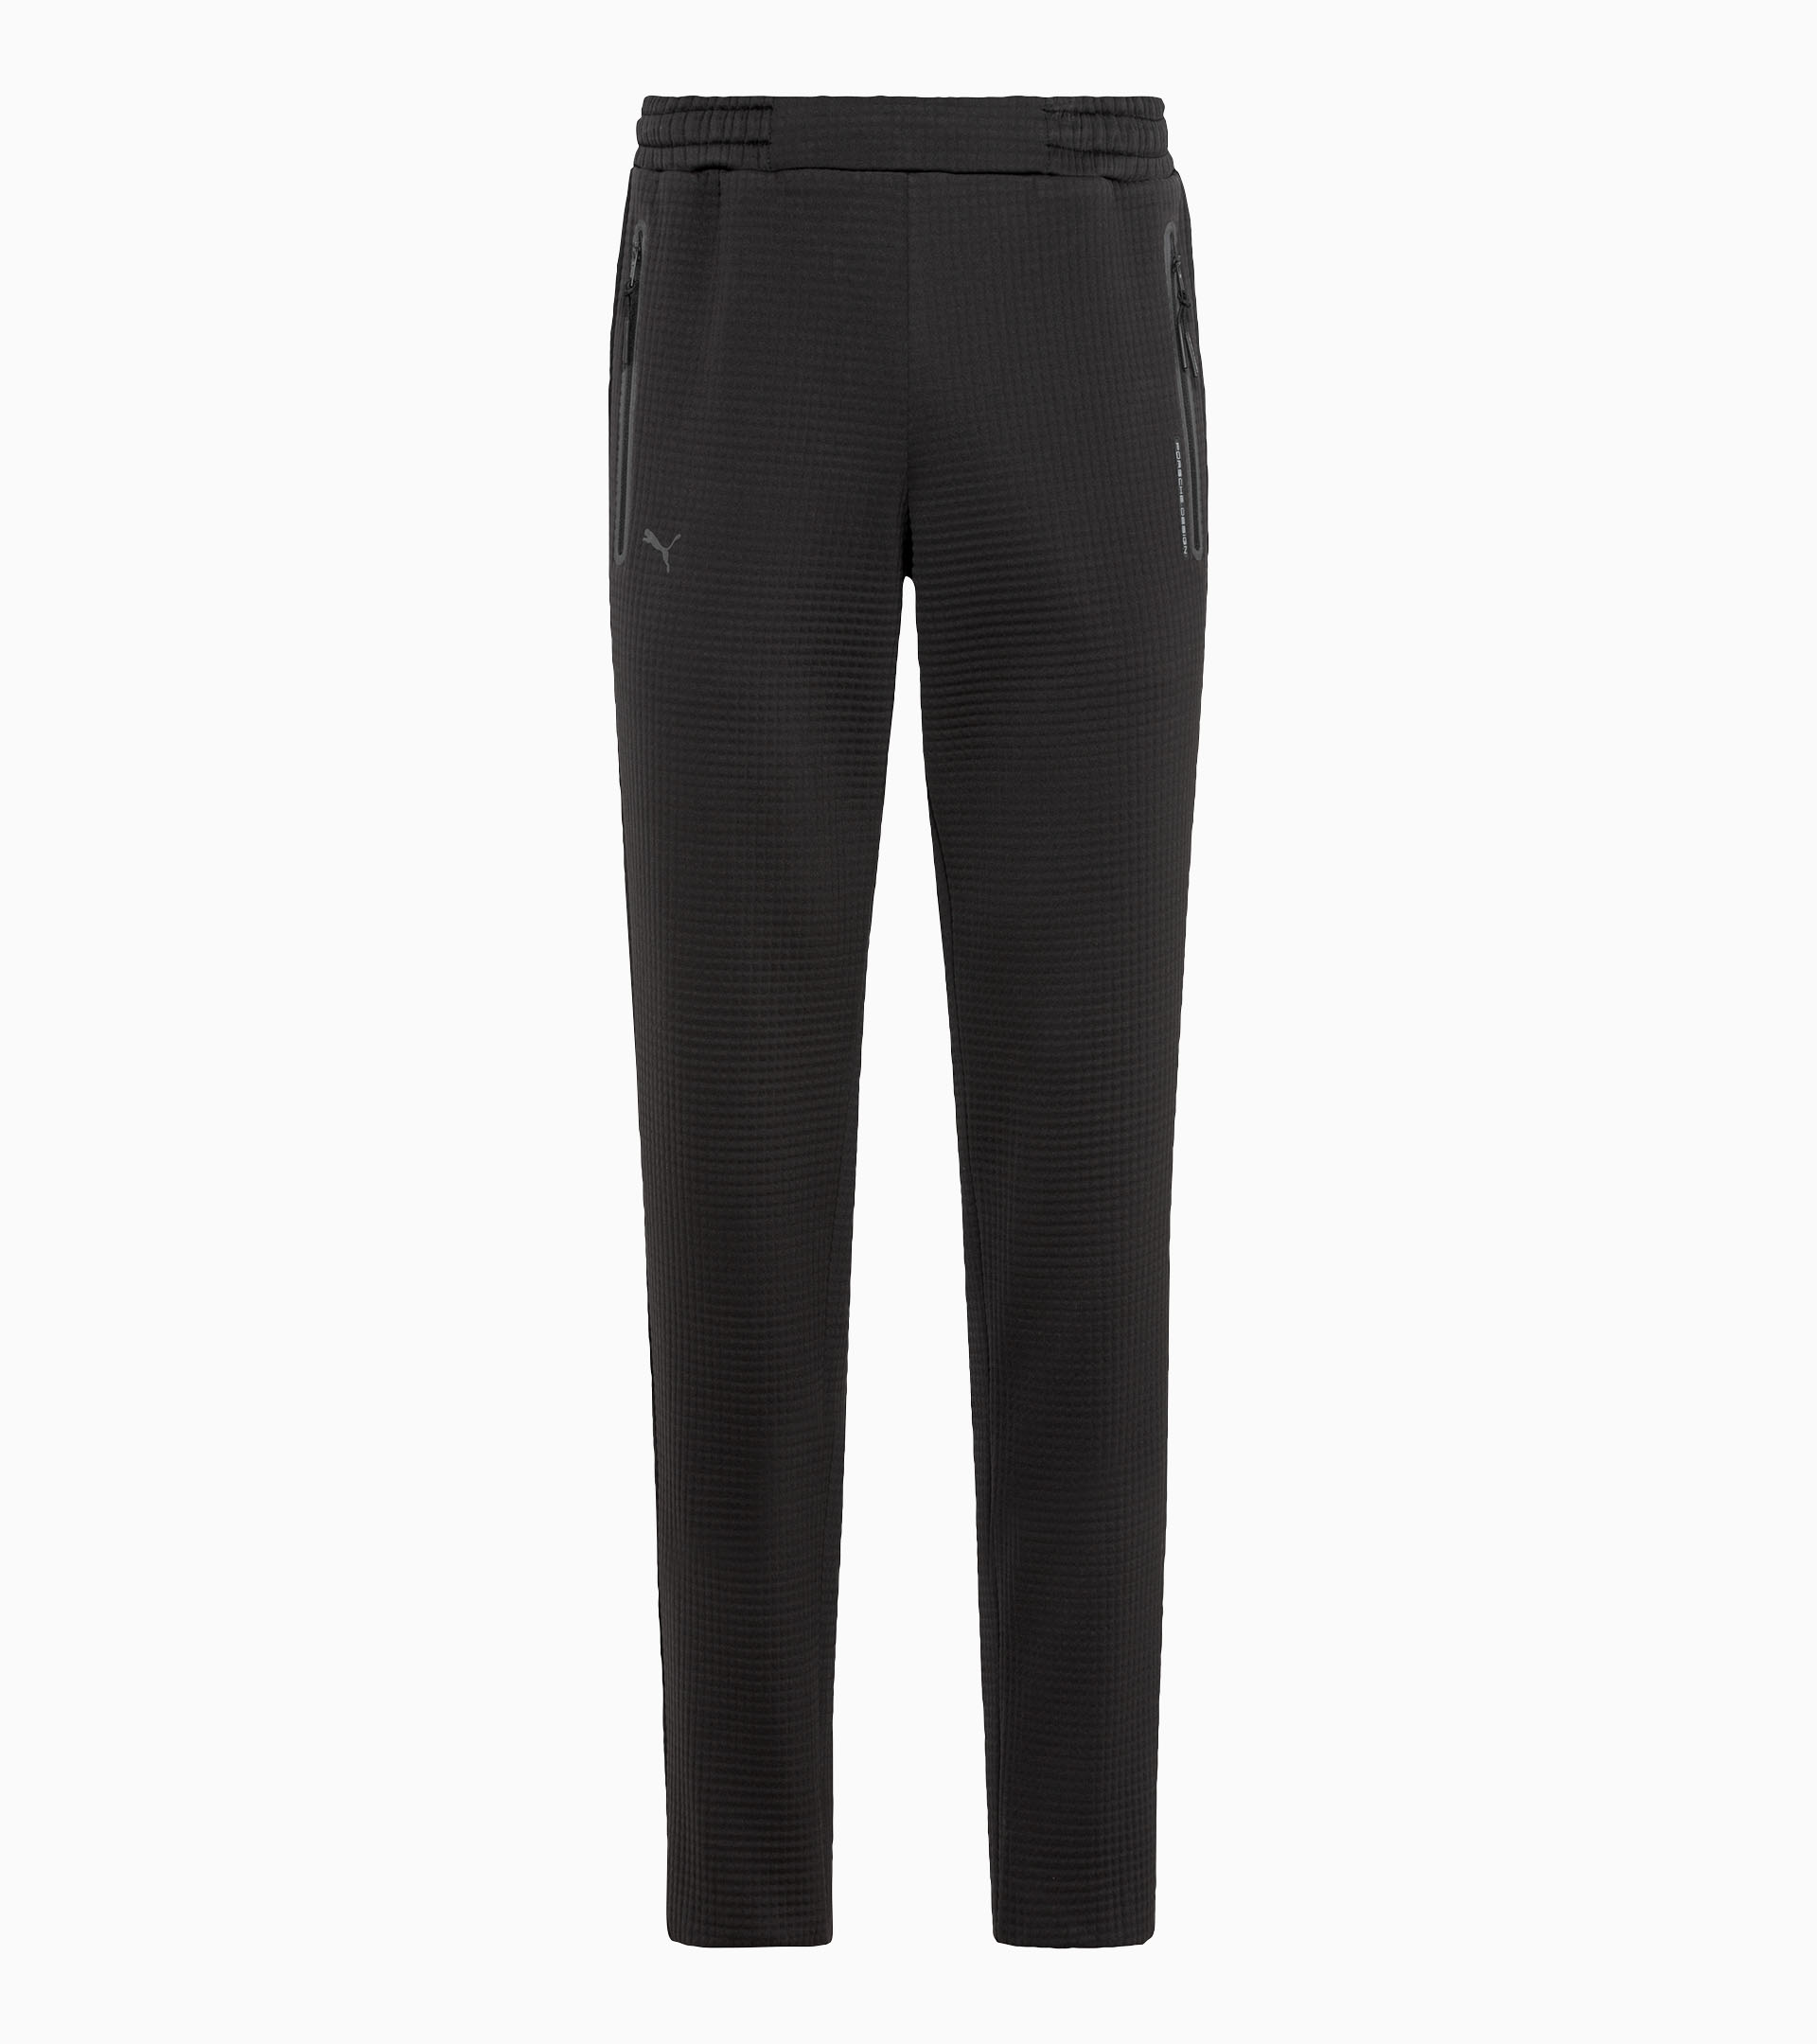 PUMA Iconic T7 SE Track Pants Sweatpants Joggers Cotton Polyester | eBay